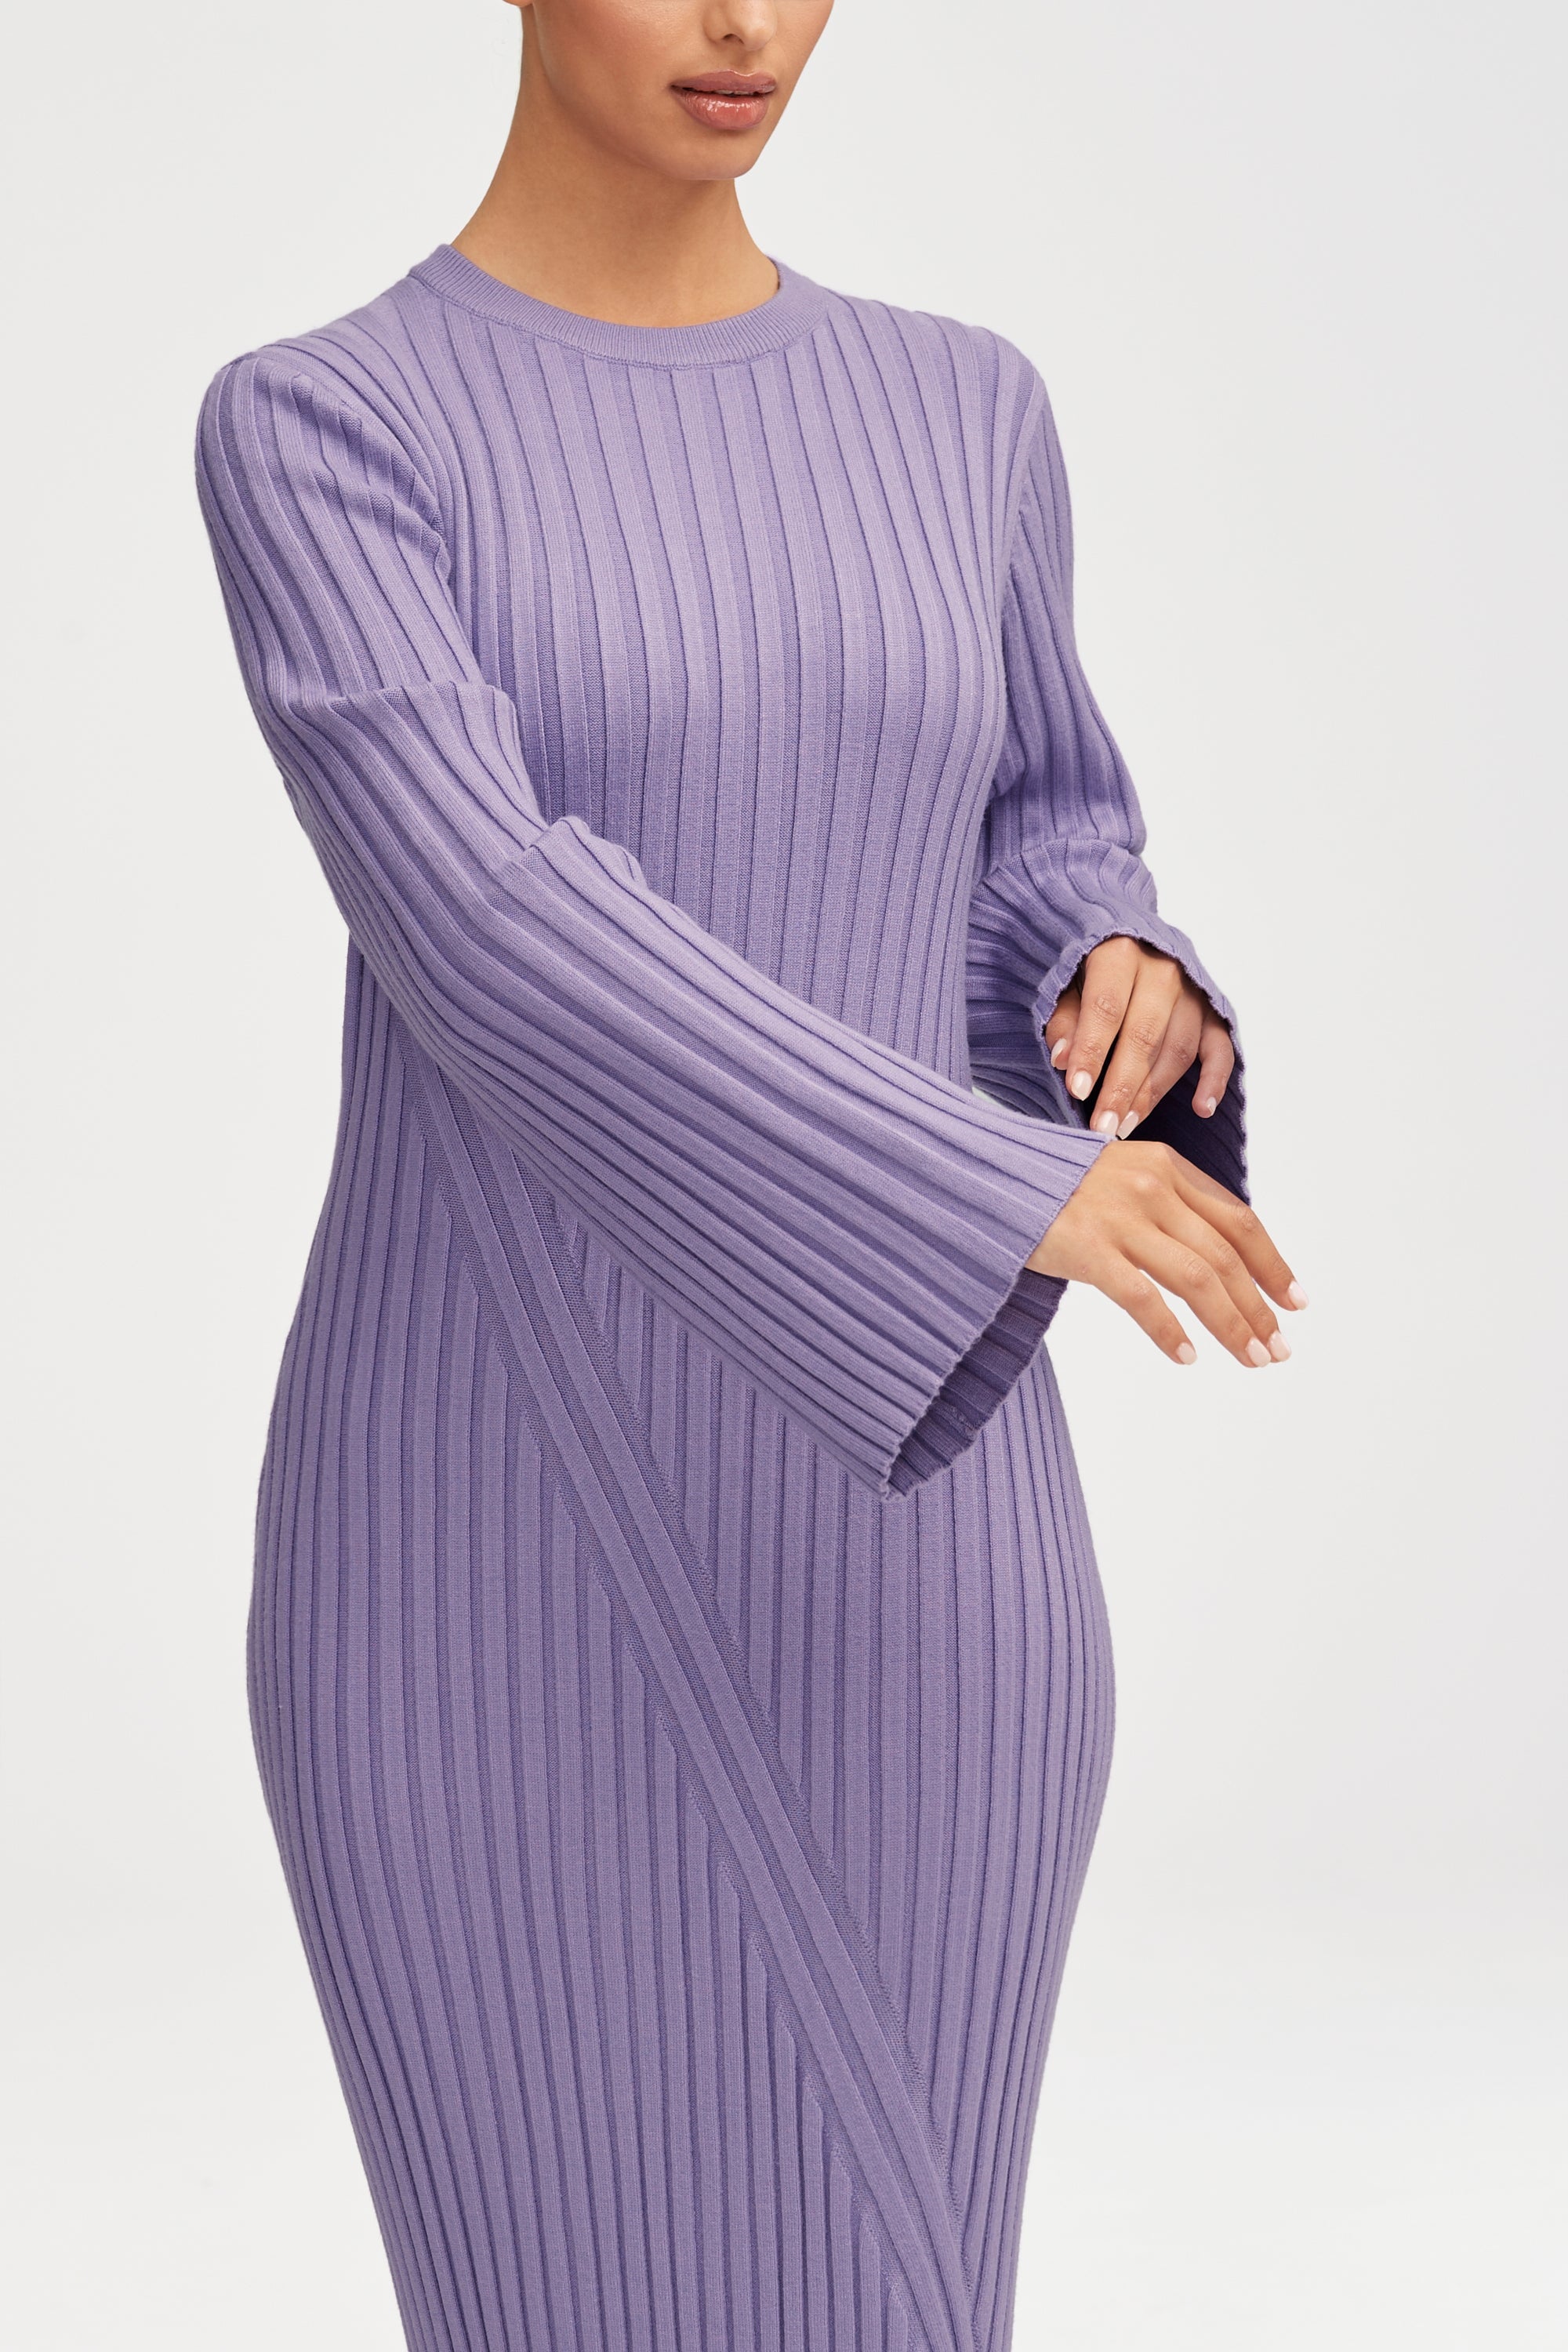 Melanie Ribbed Knit Maxi Dress - Lavender Clothing Veiled 